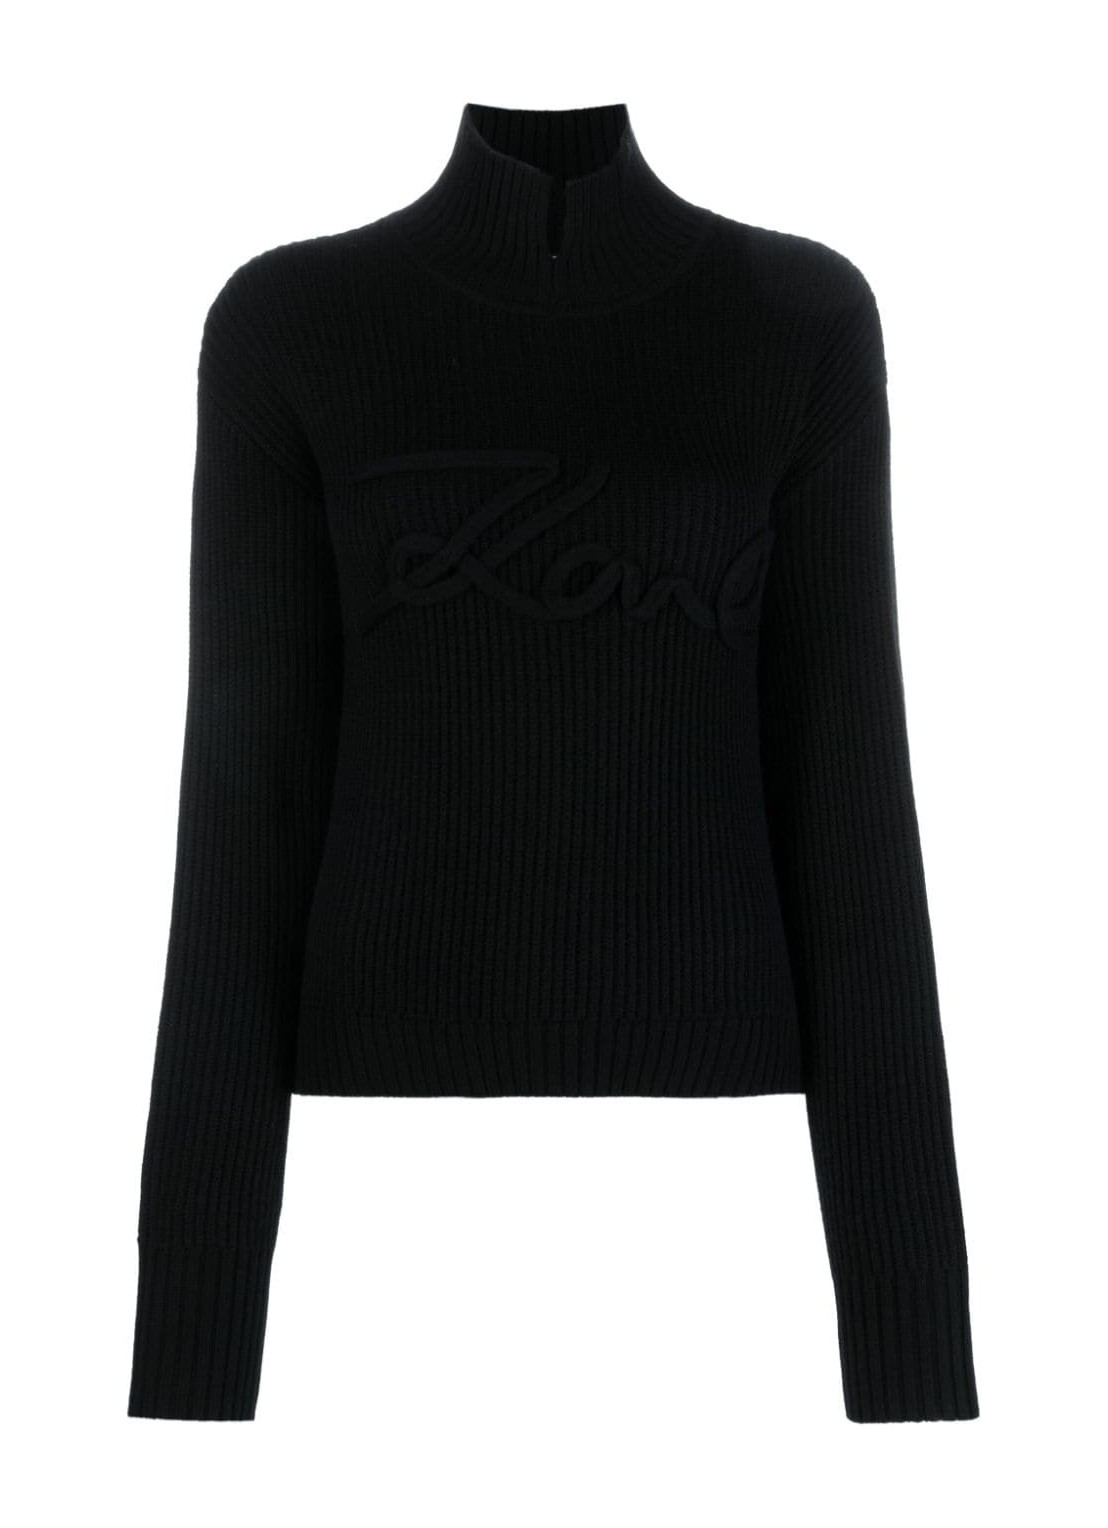 Punto karl lagerfeld knitwear woman signature soutache knit 236w2014 999 talla negro
 